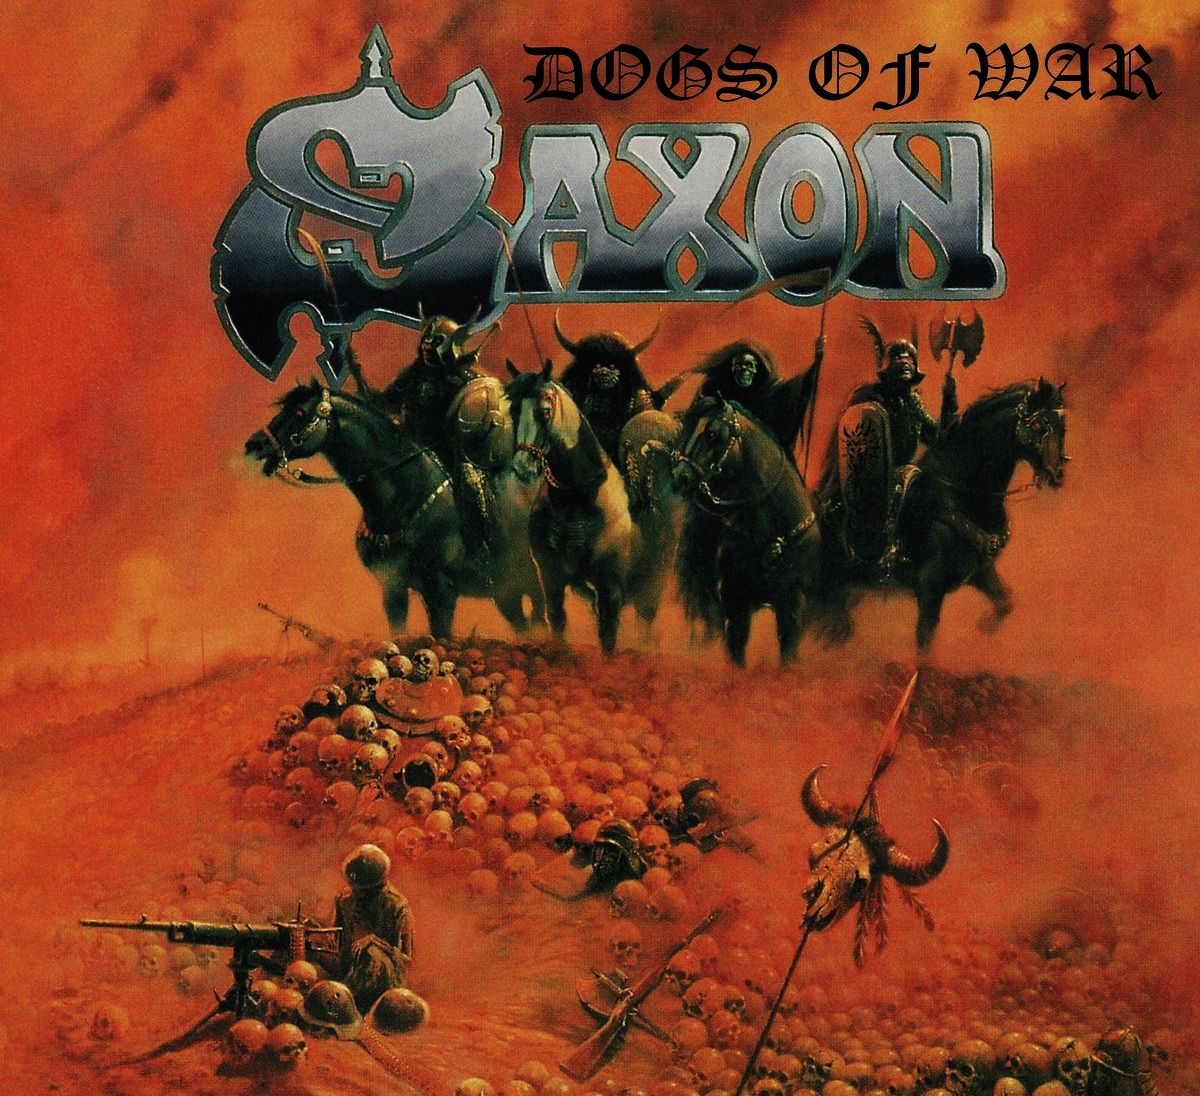 SAXON – Dogs Of War